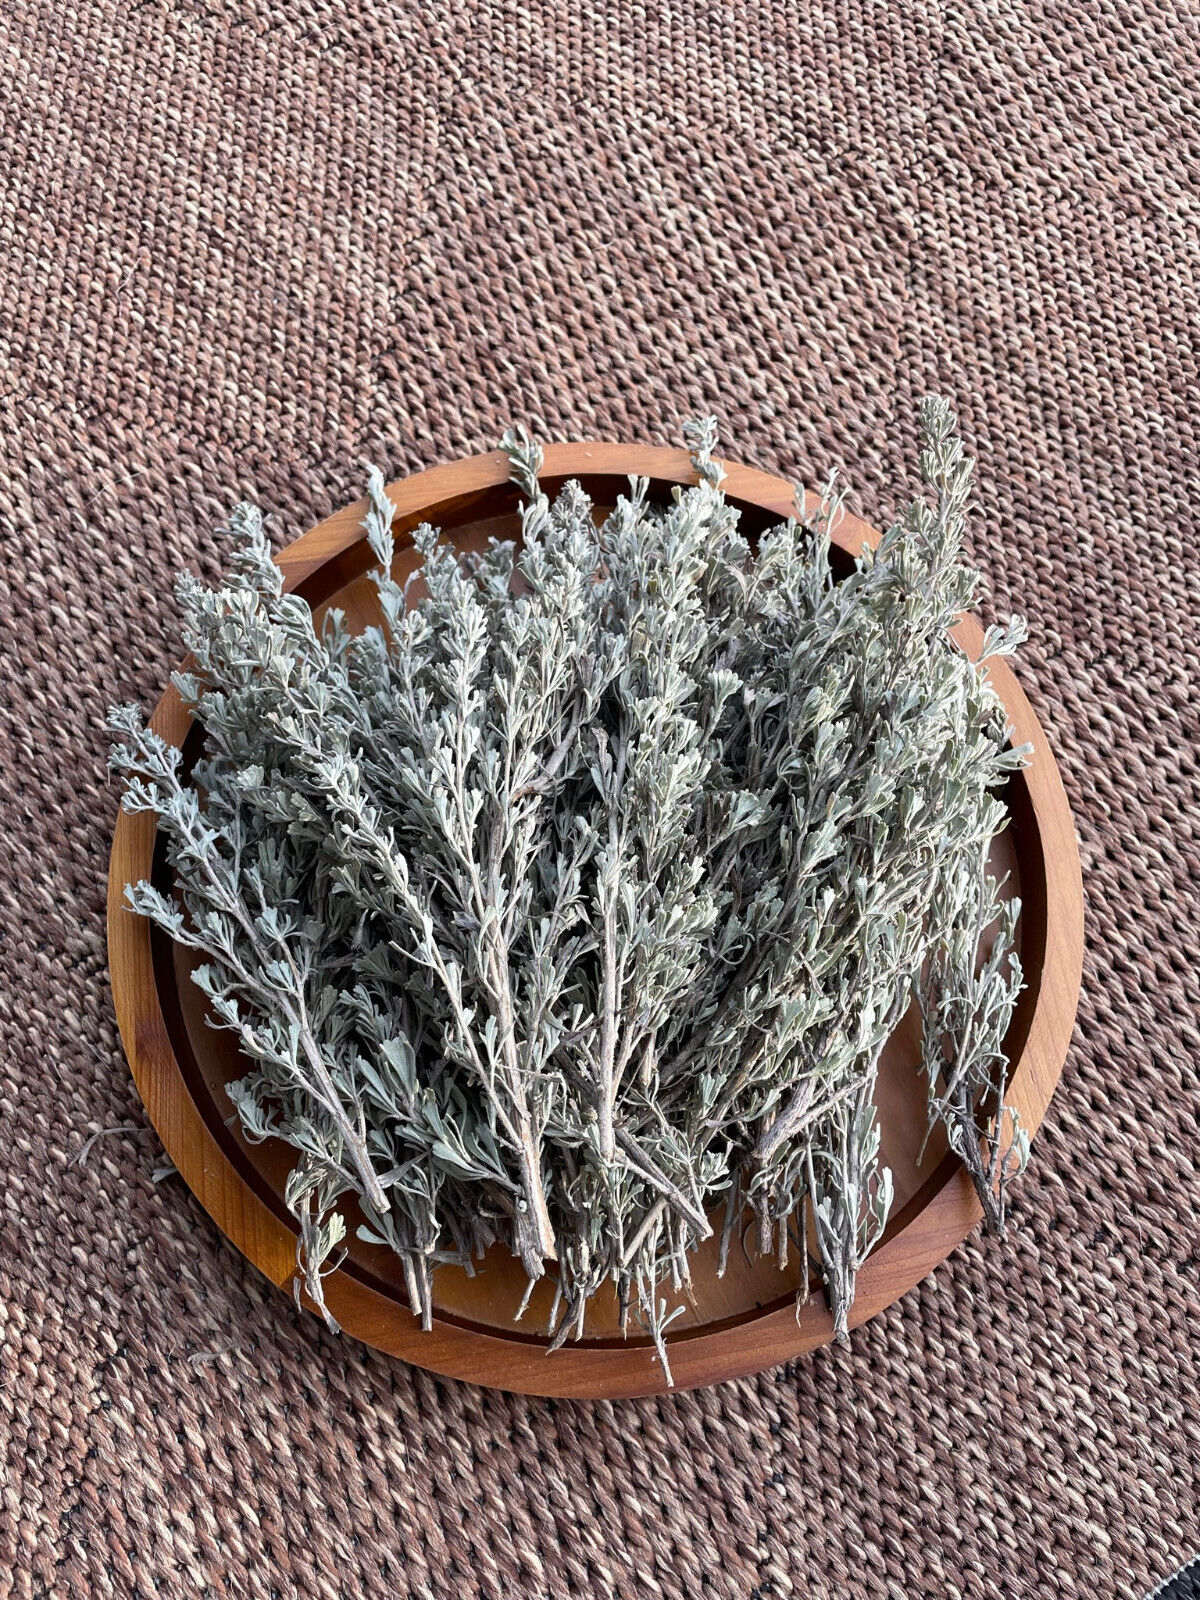 Fresh Cut Artemisia Tridentata Big Sagebrush Wild Native Organic SMUDGING 8oz